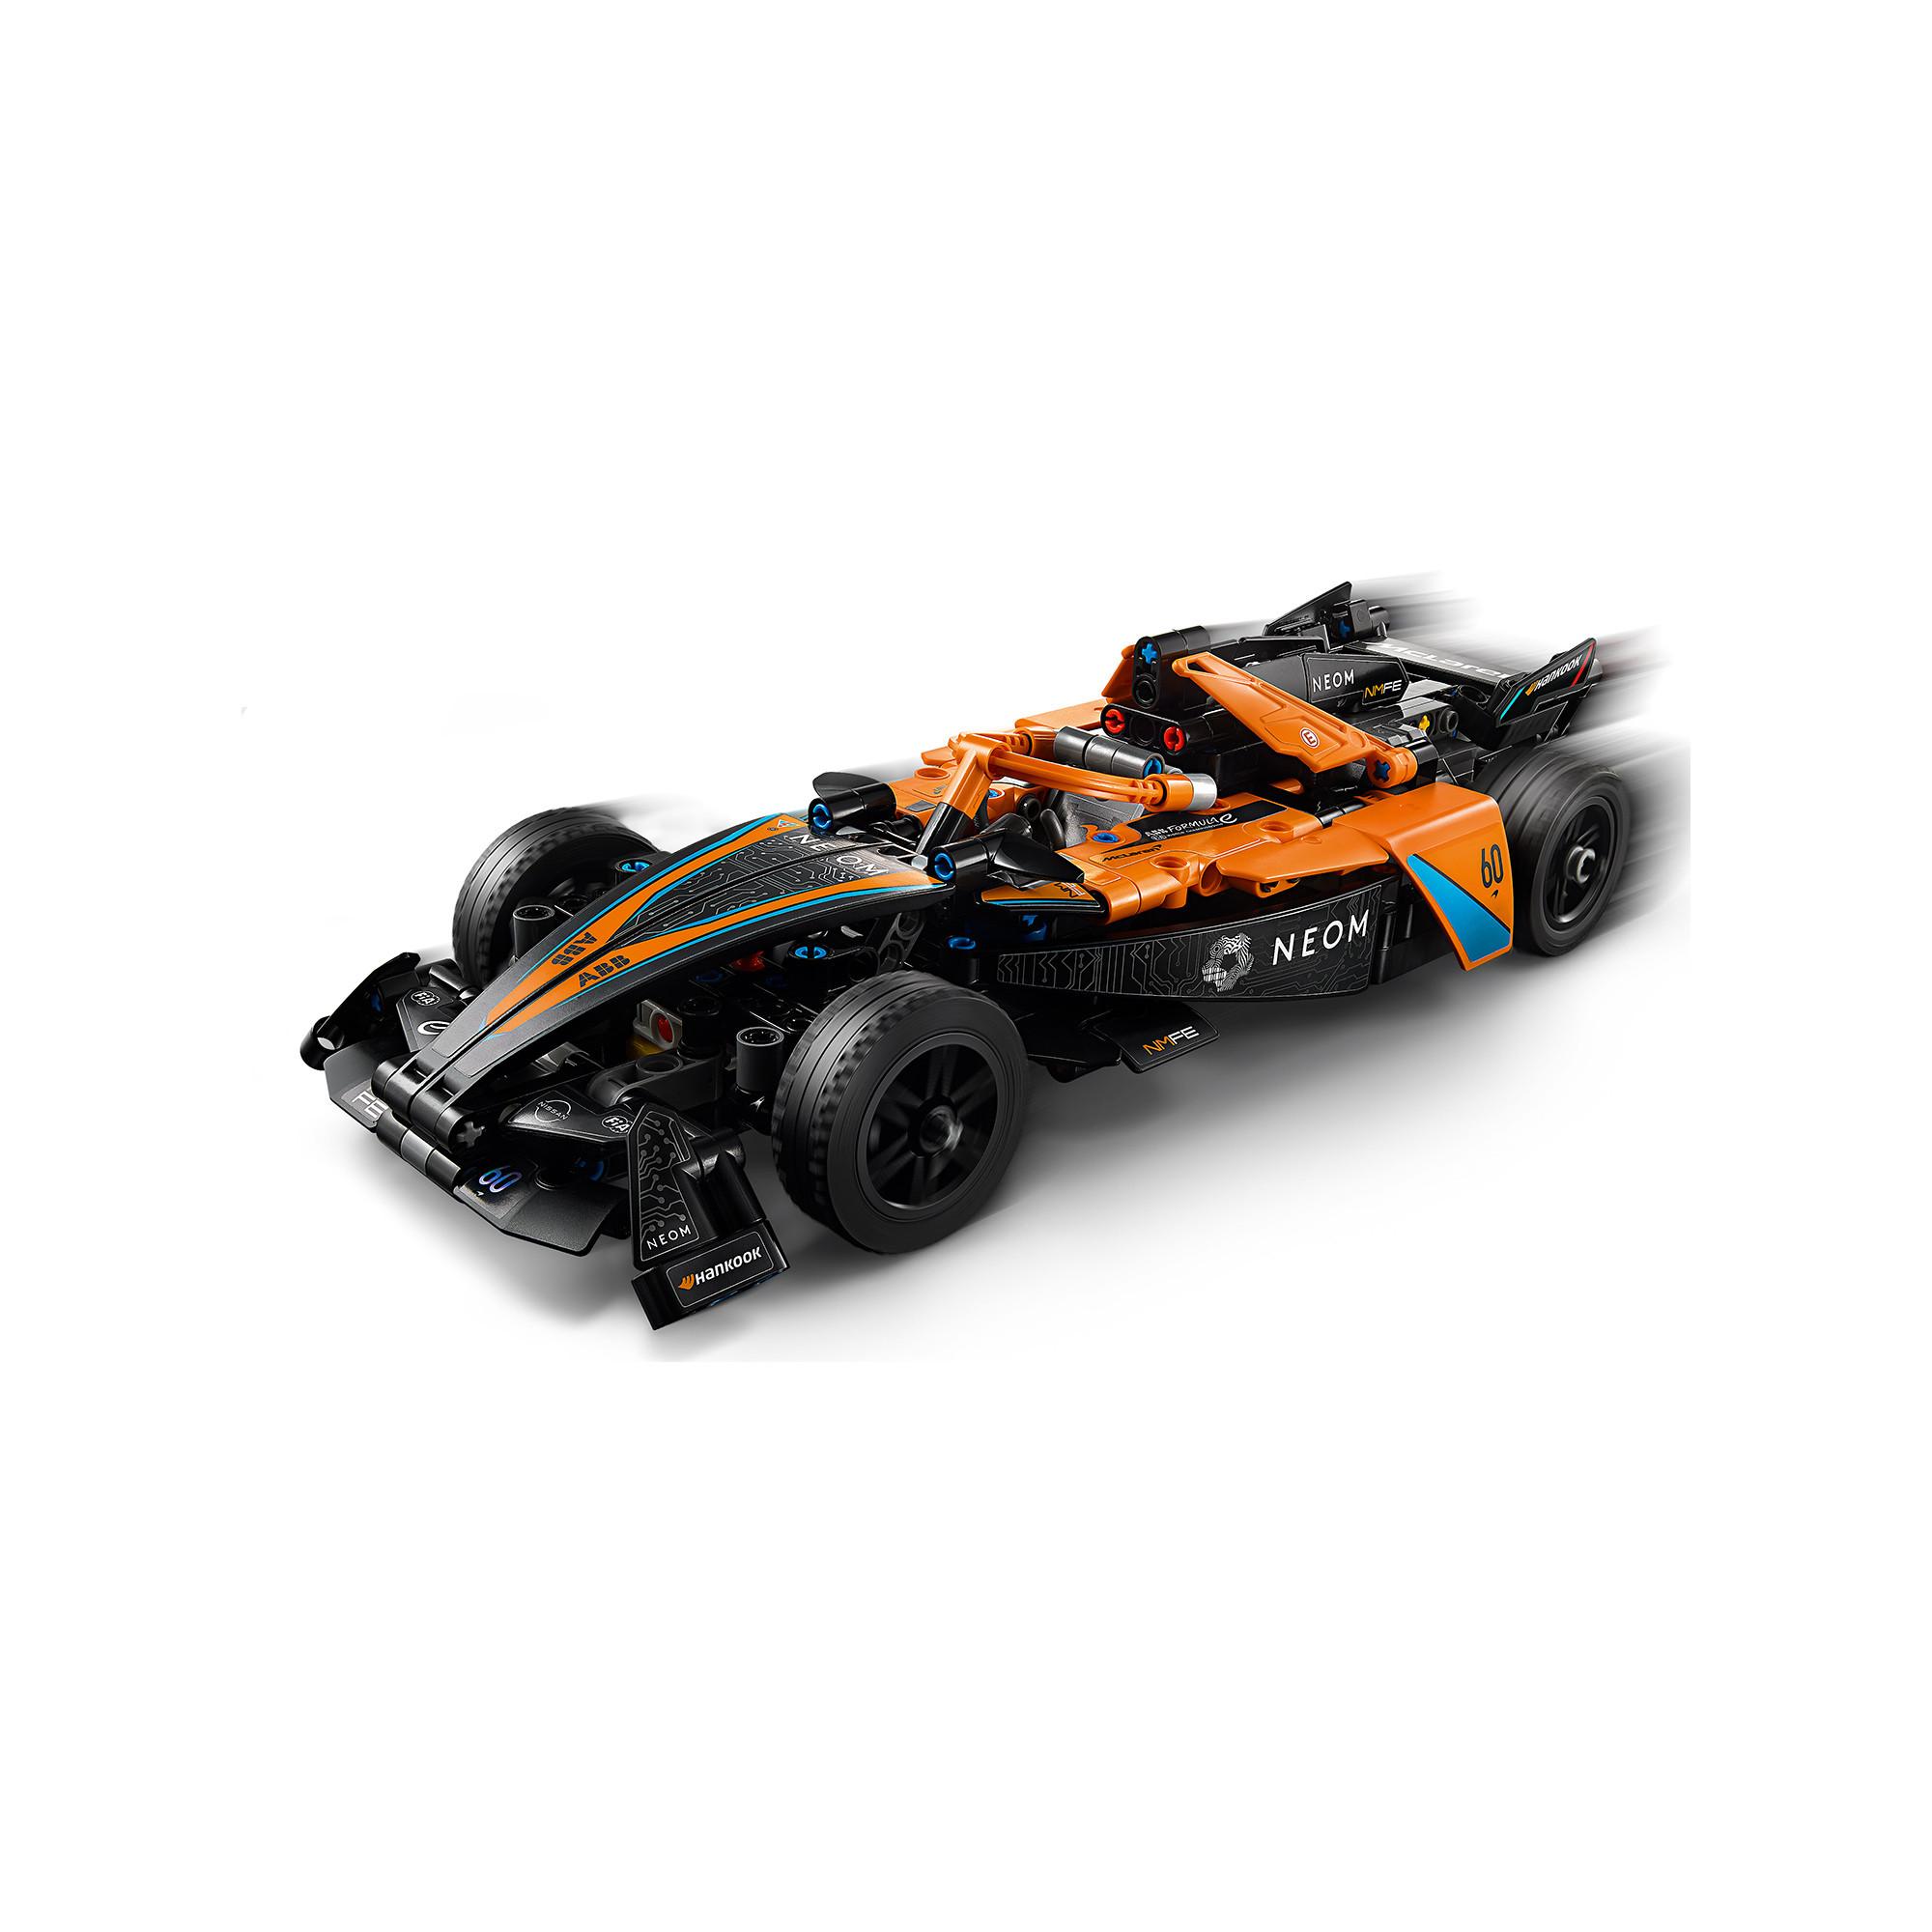 LEGO®  42169 NEOM McLaren Formula E Race Car 